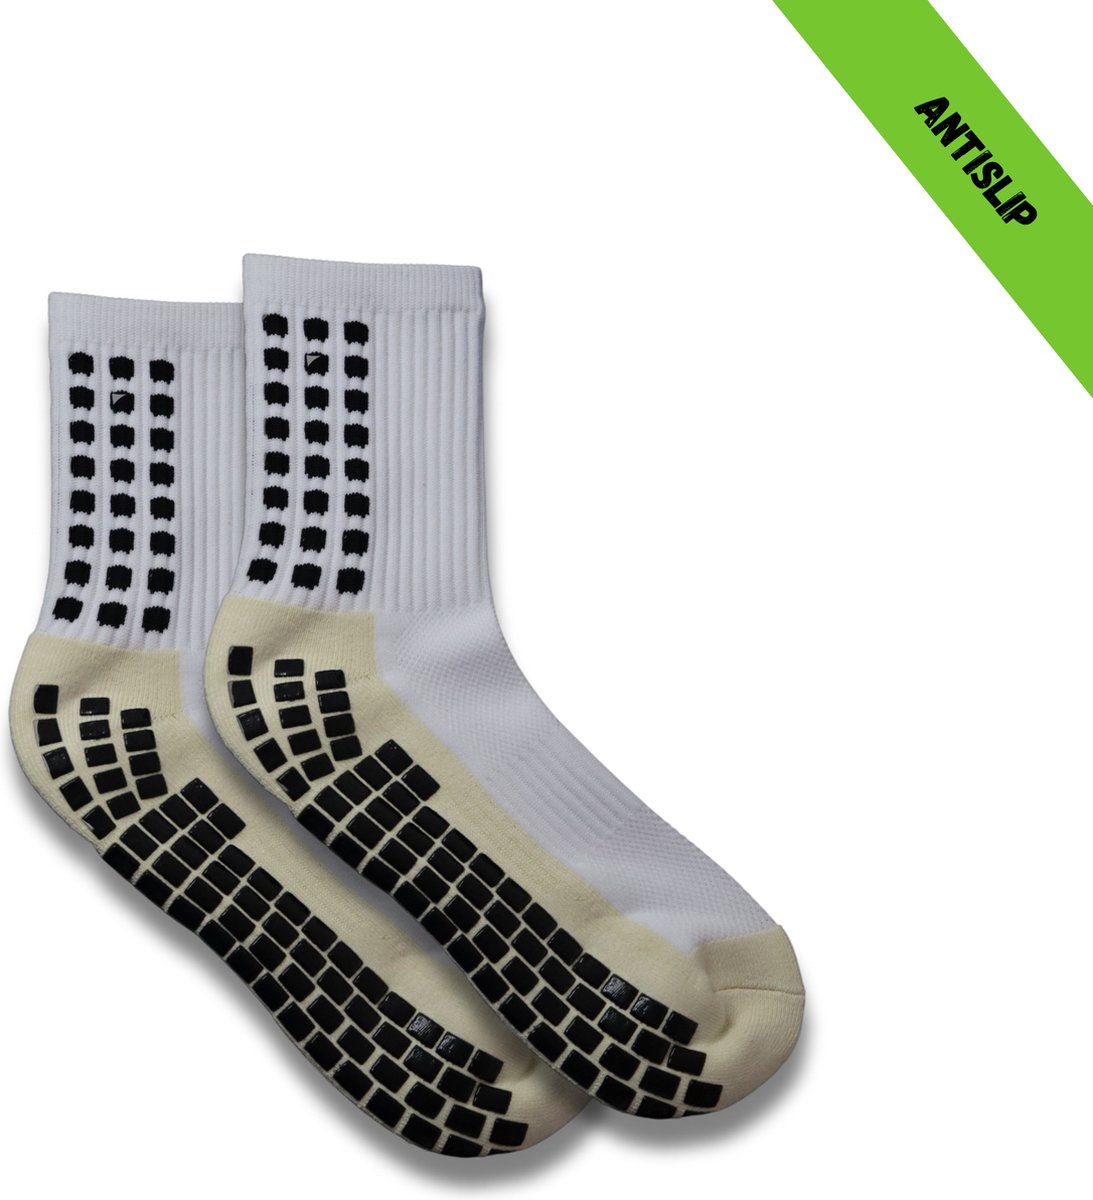 Gripsokken - Sportsokken - Gripsokken Voetbal - Gripsokken Voetbal Wit- Grip Socks - Pilates Sokken - Yoga Sokken - Anti Blaren - One Size - Compressie